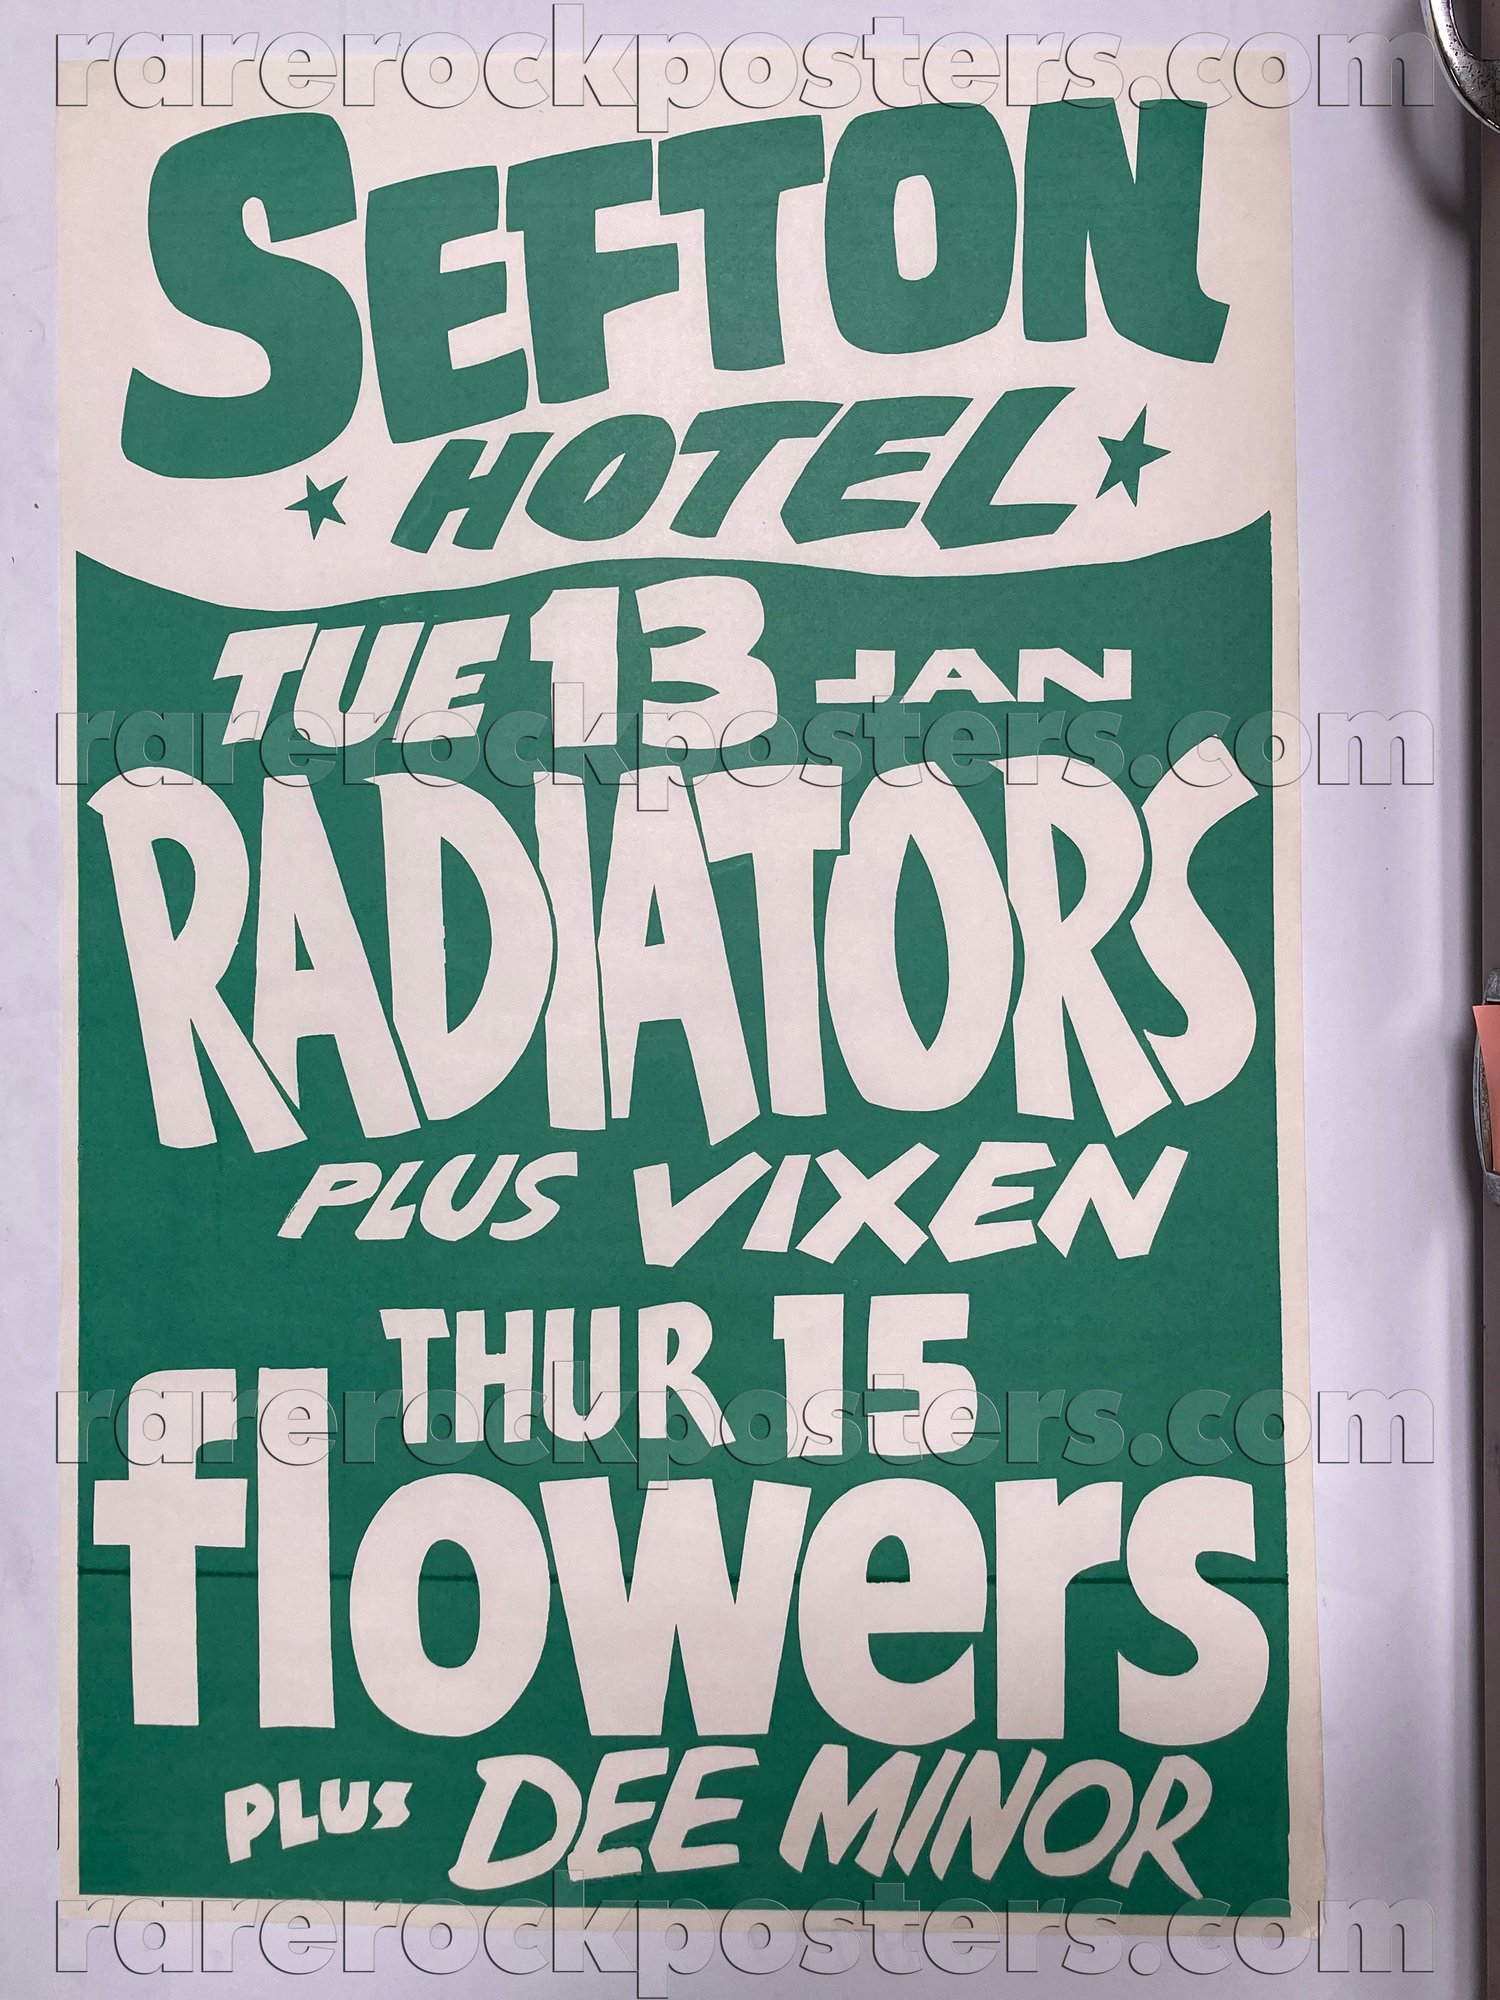 FLOWERS / RADIATORS / DEE MINOR / VIXEN ~ ORIGINAL 1981 AUST GIG POSTER ~ SEFTON HOTEL ~ SYDNEY